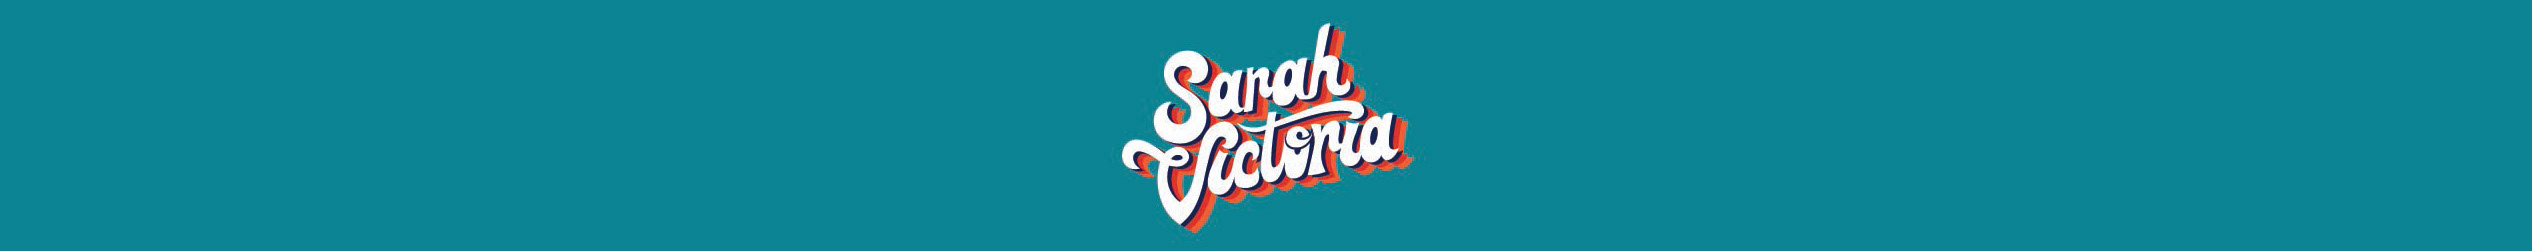 Sarah Victoria's profile banner